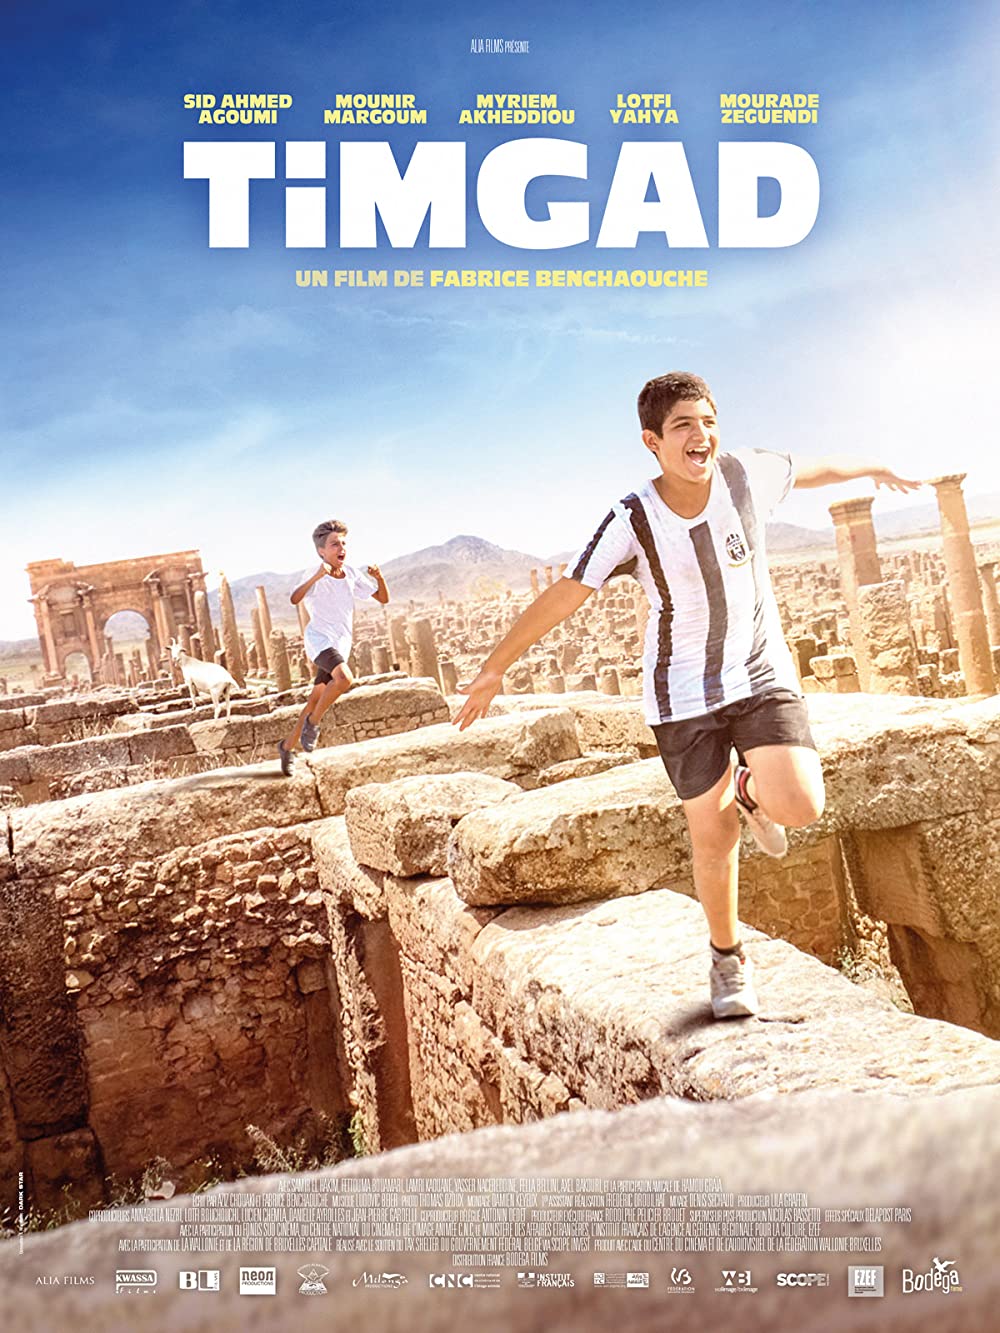 Filmbeschreibung zu Timgad